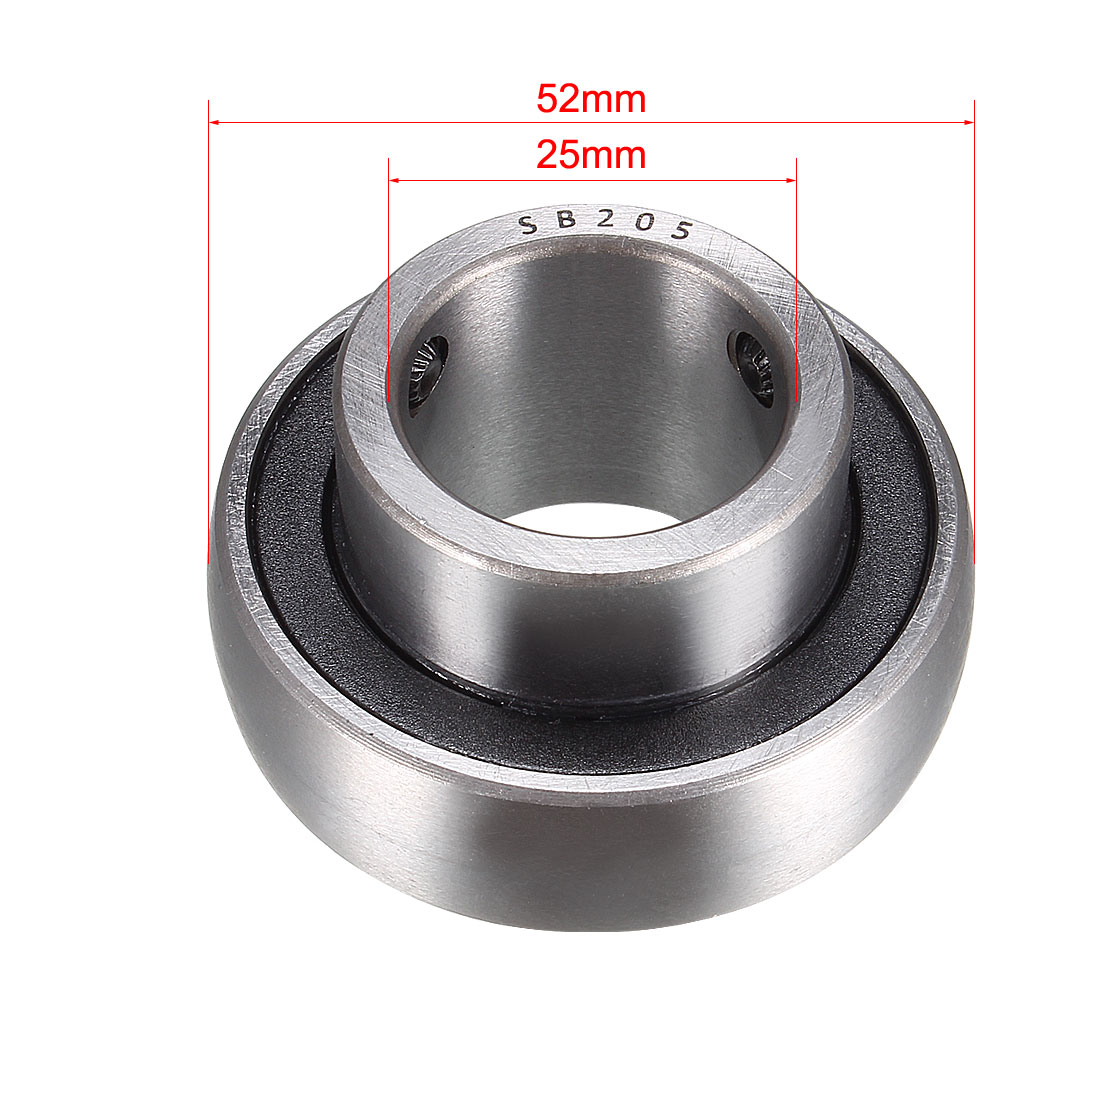 15mm Bore Diameter Chrome Steel uxcell UC202 Insert Bearings Set Screws Lock